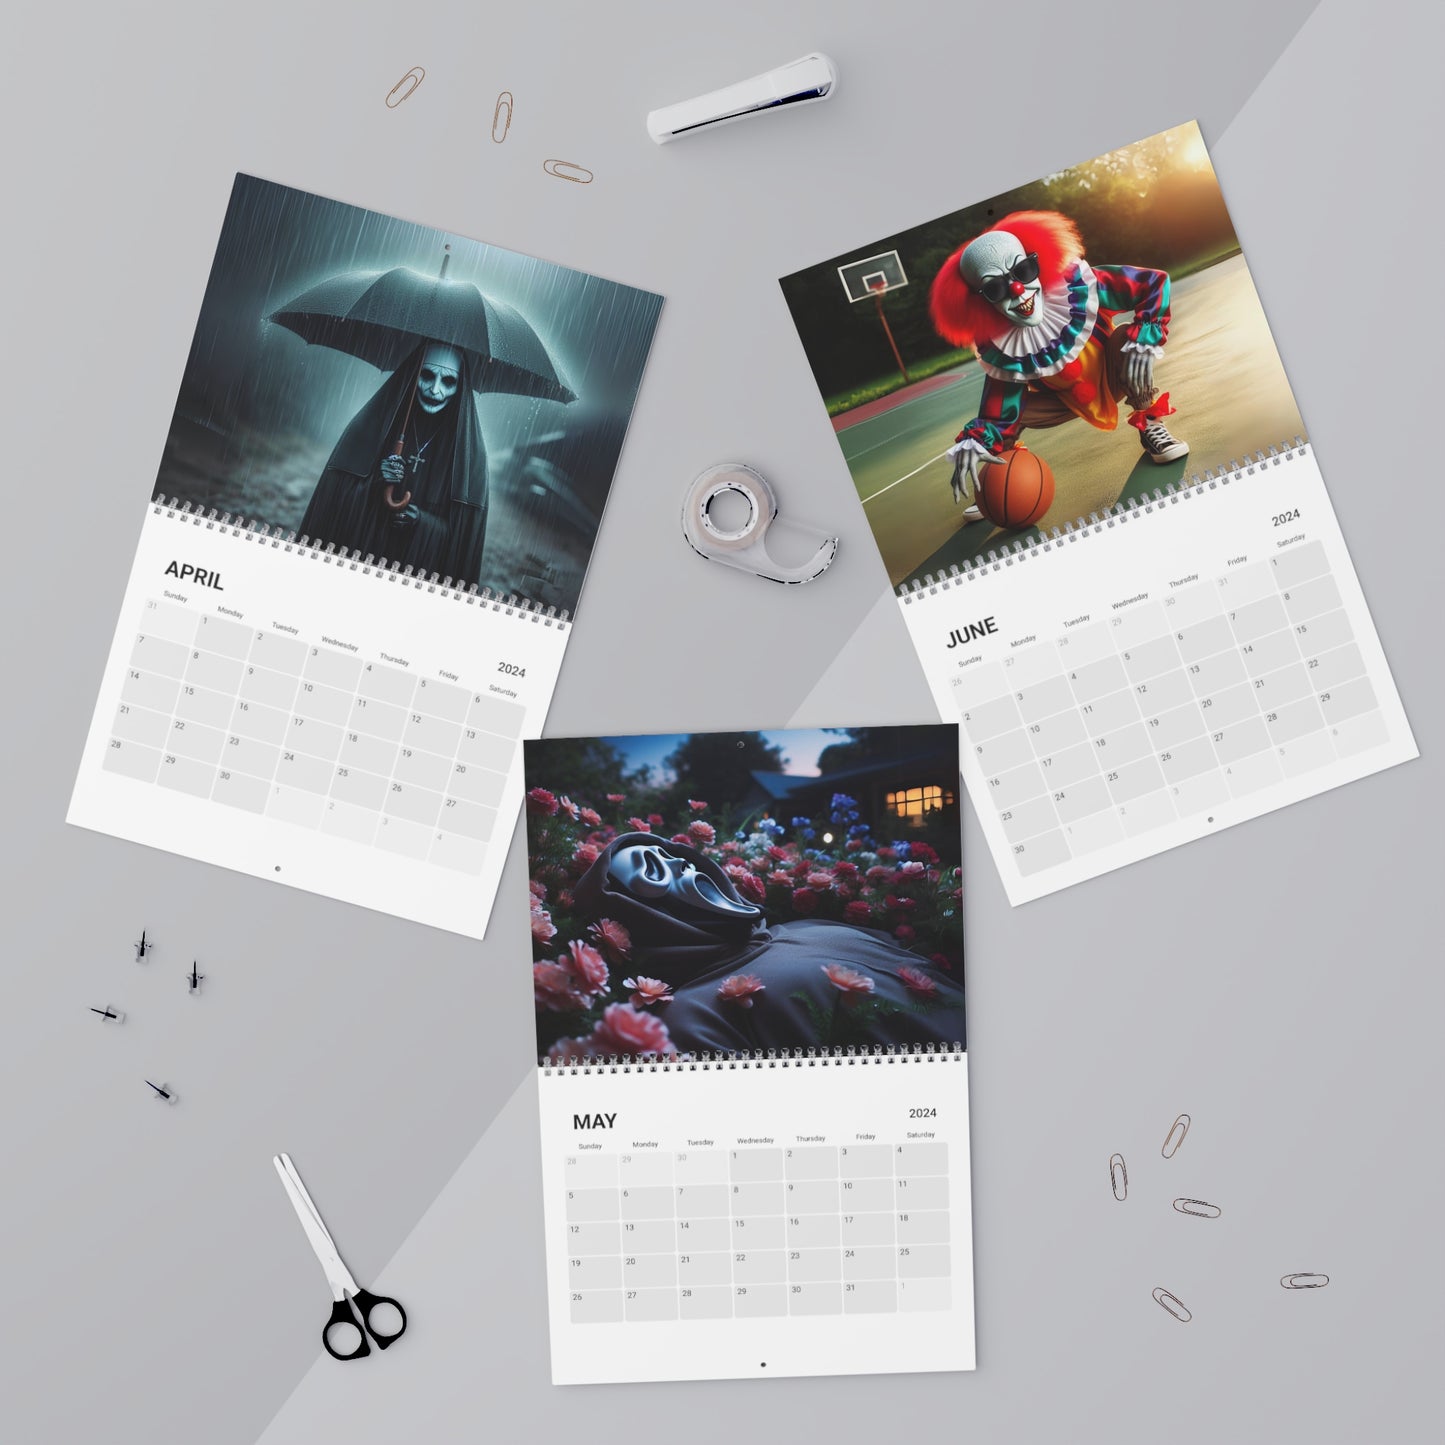 Horror Movie Themed Wall Calendar (2024), Horror Fan, Horror Gift, New Year, Freddy Krueger, Jason, Michael Myers